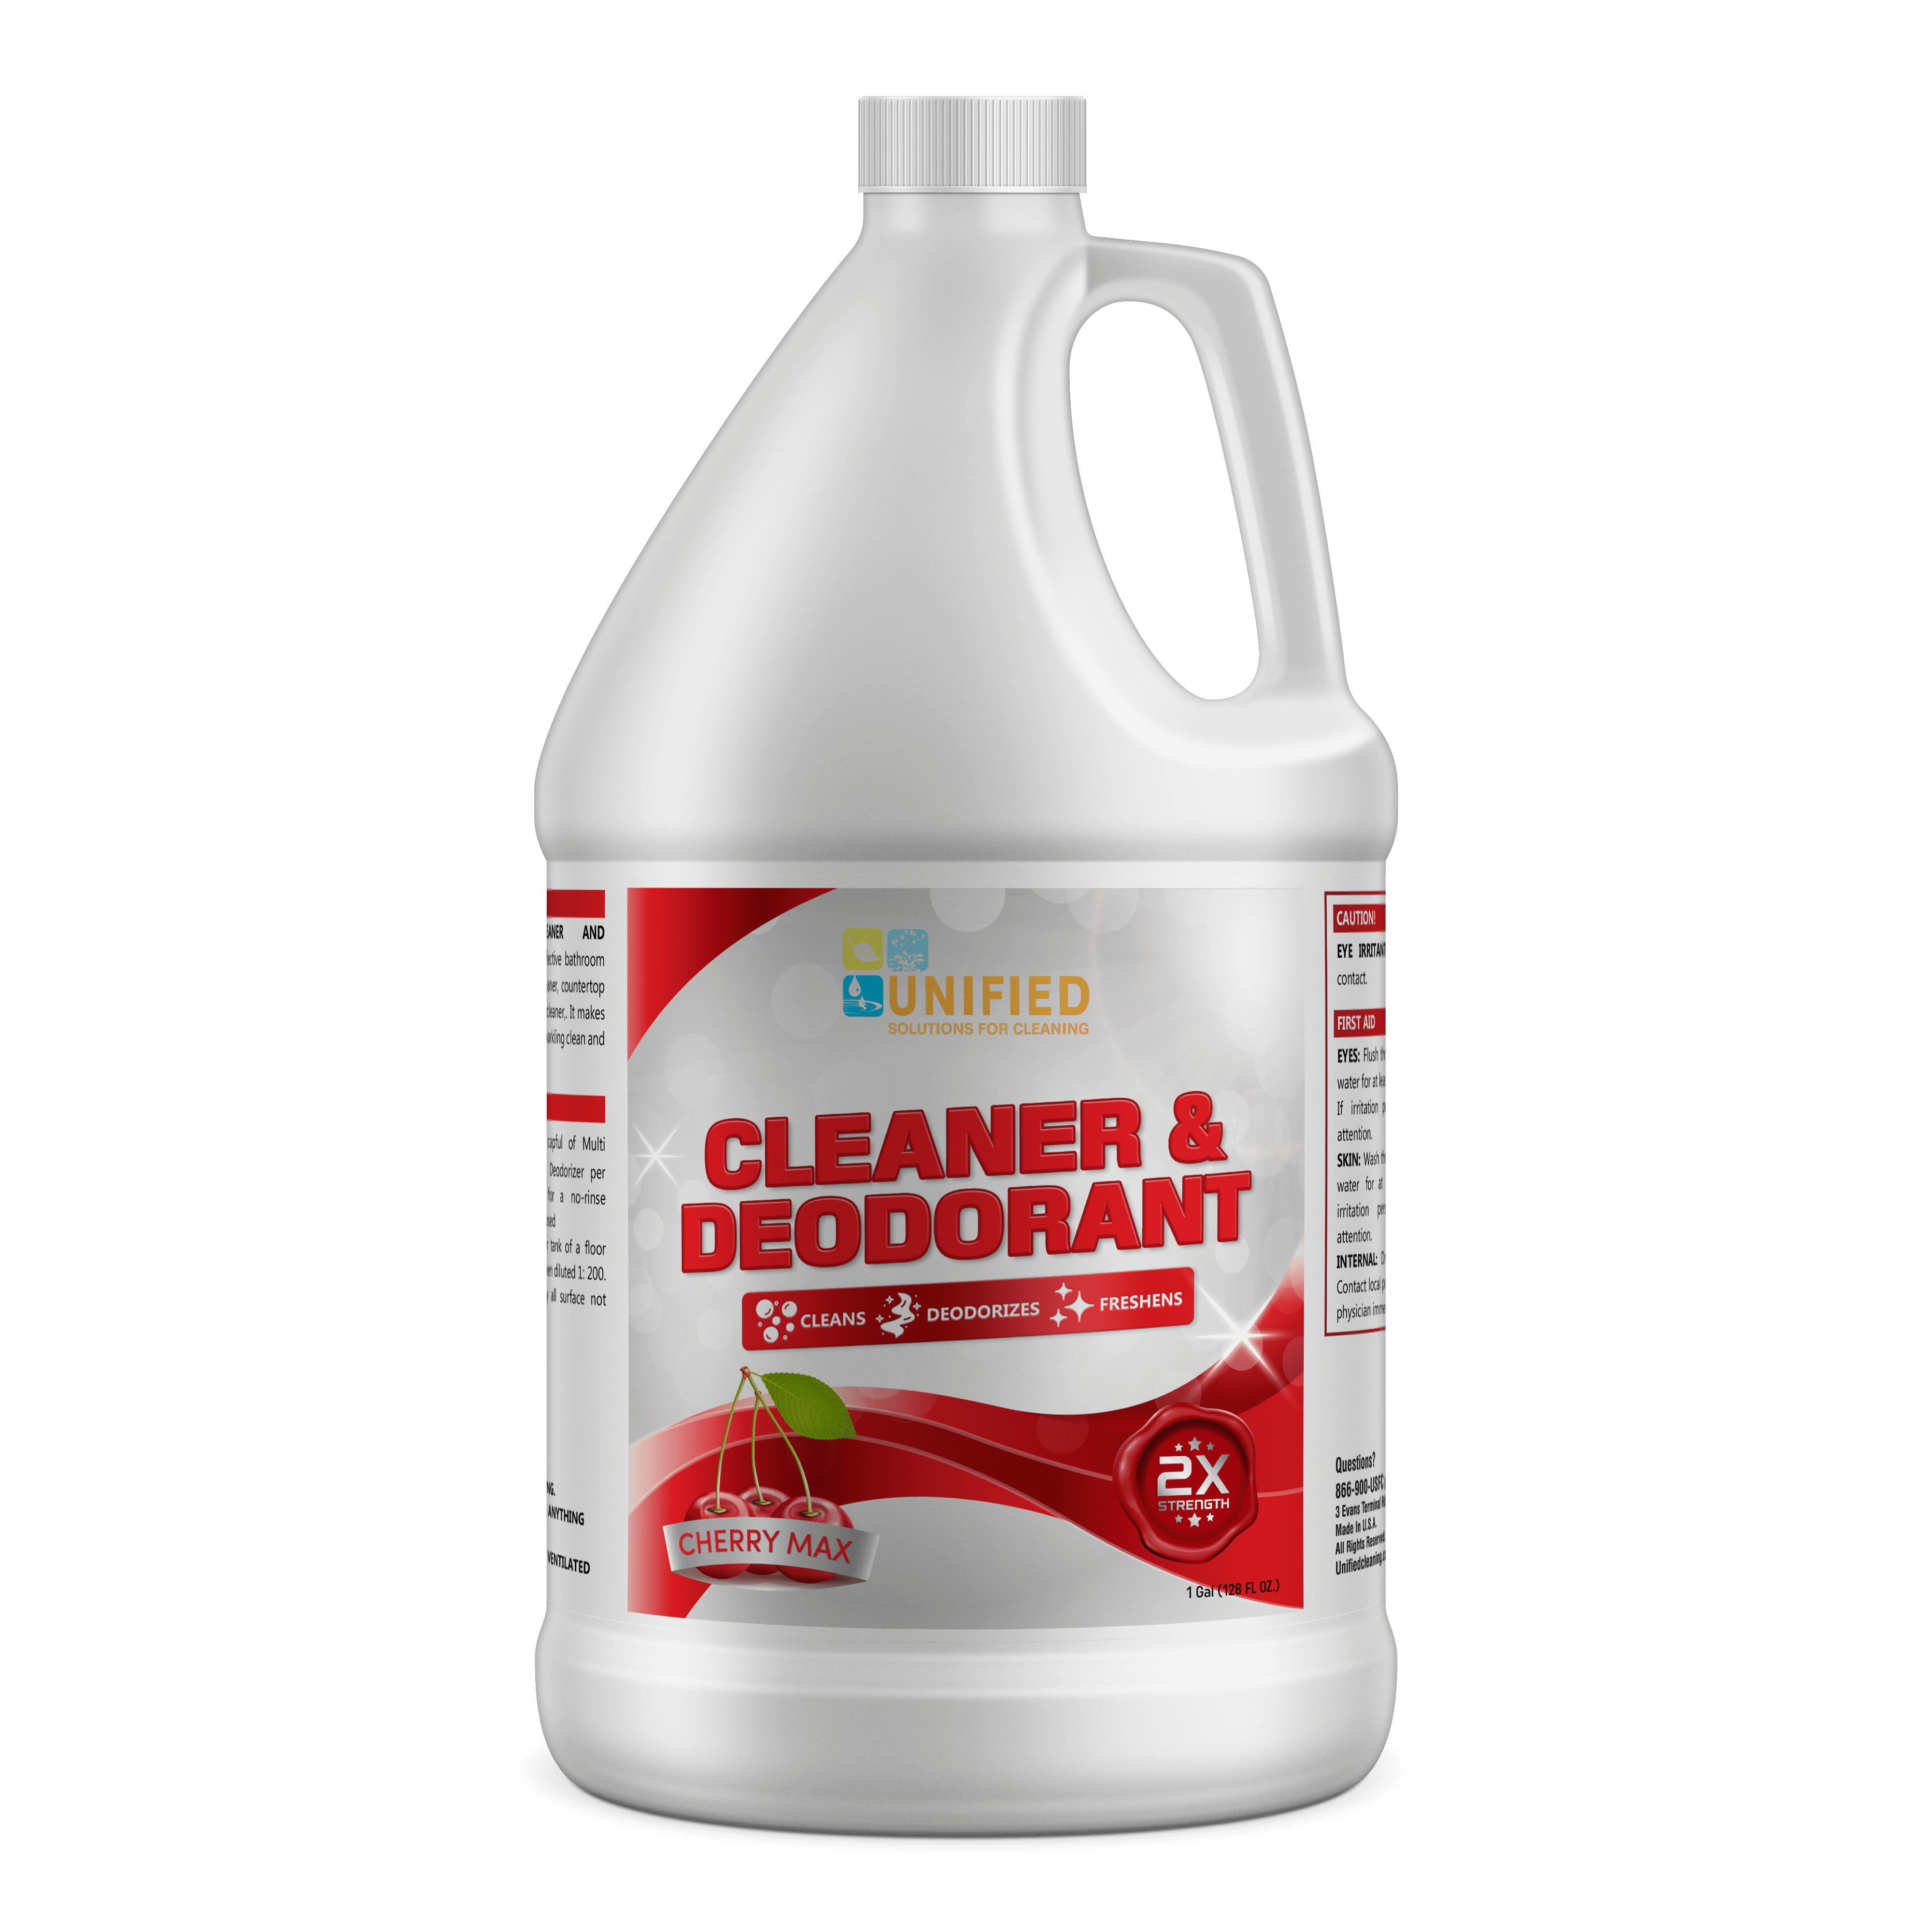 Cherry Max Scented Cleaner & Deodorant